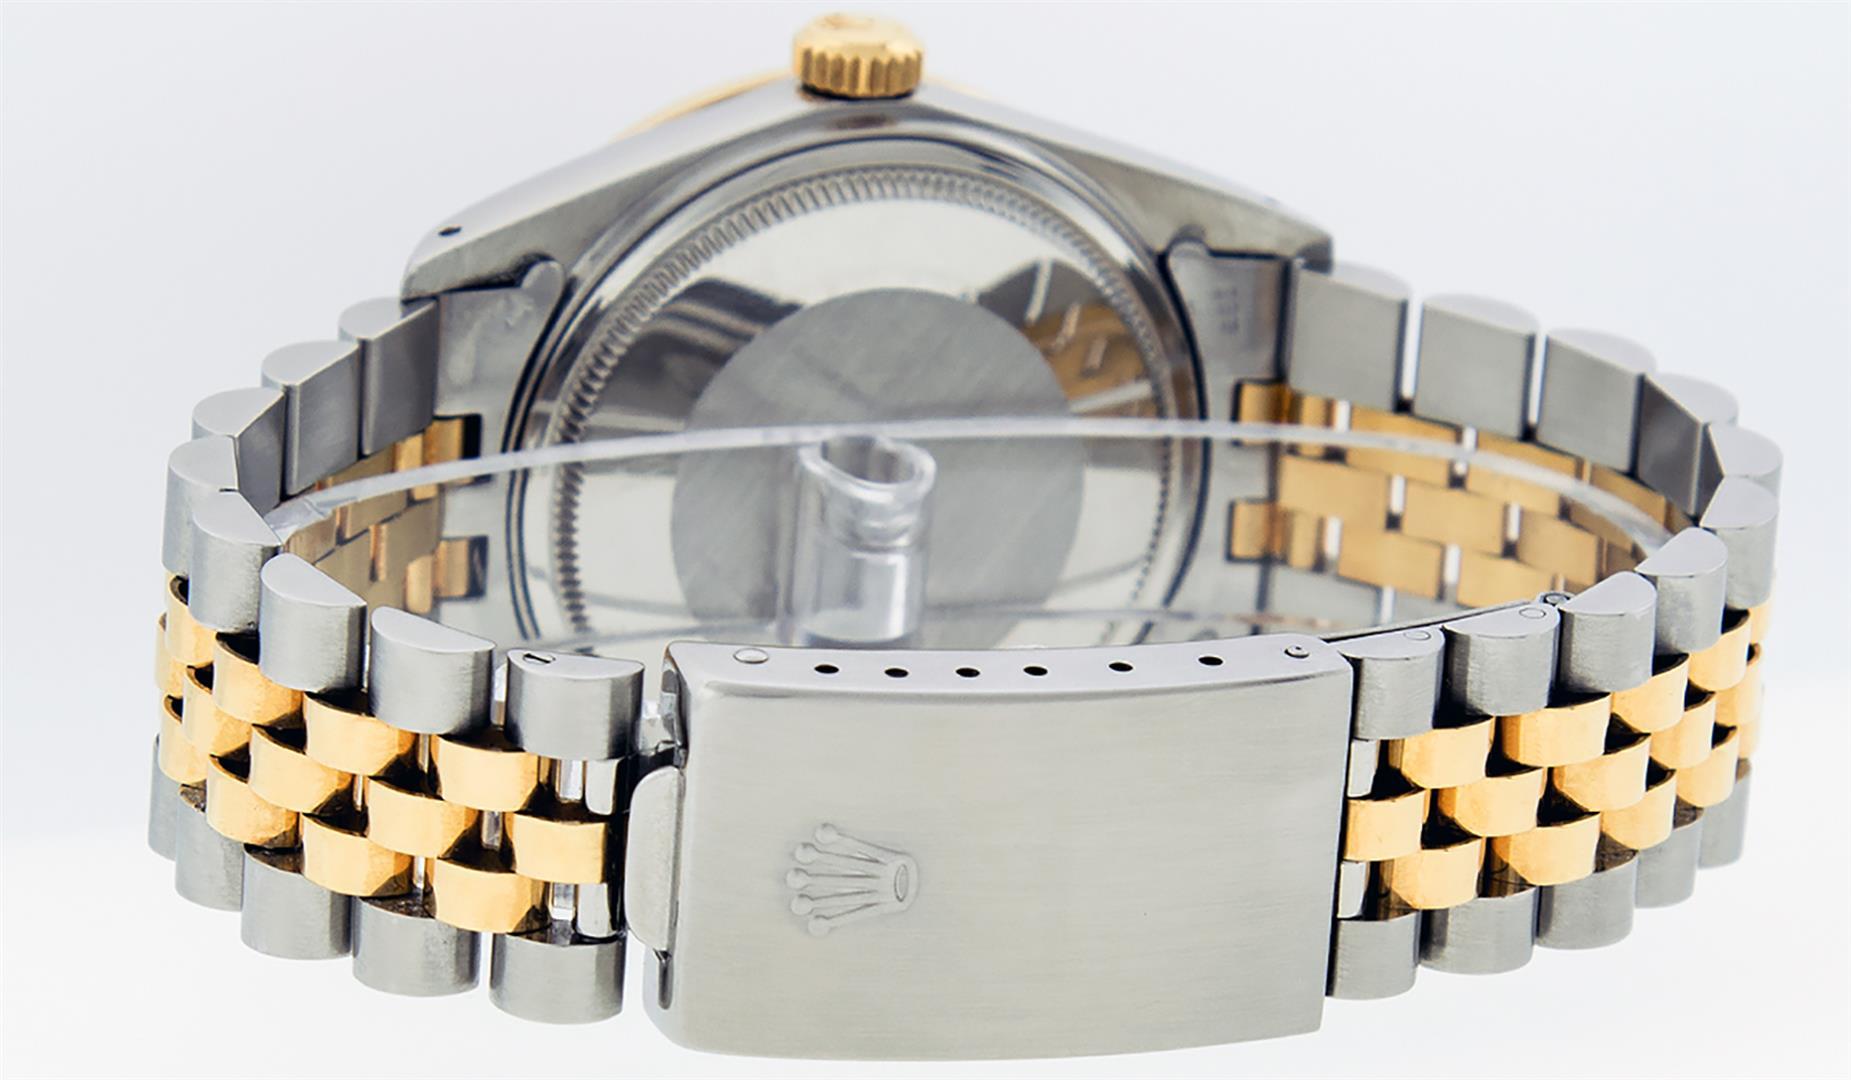 Rolex Mens 2 Tone 14K Brown Diamond & Emerald 36MM Datejust Wristwatch